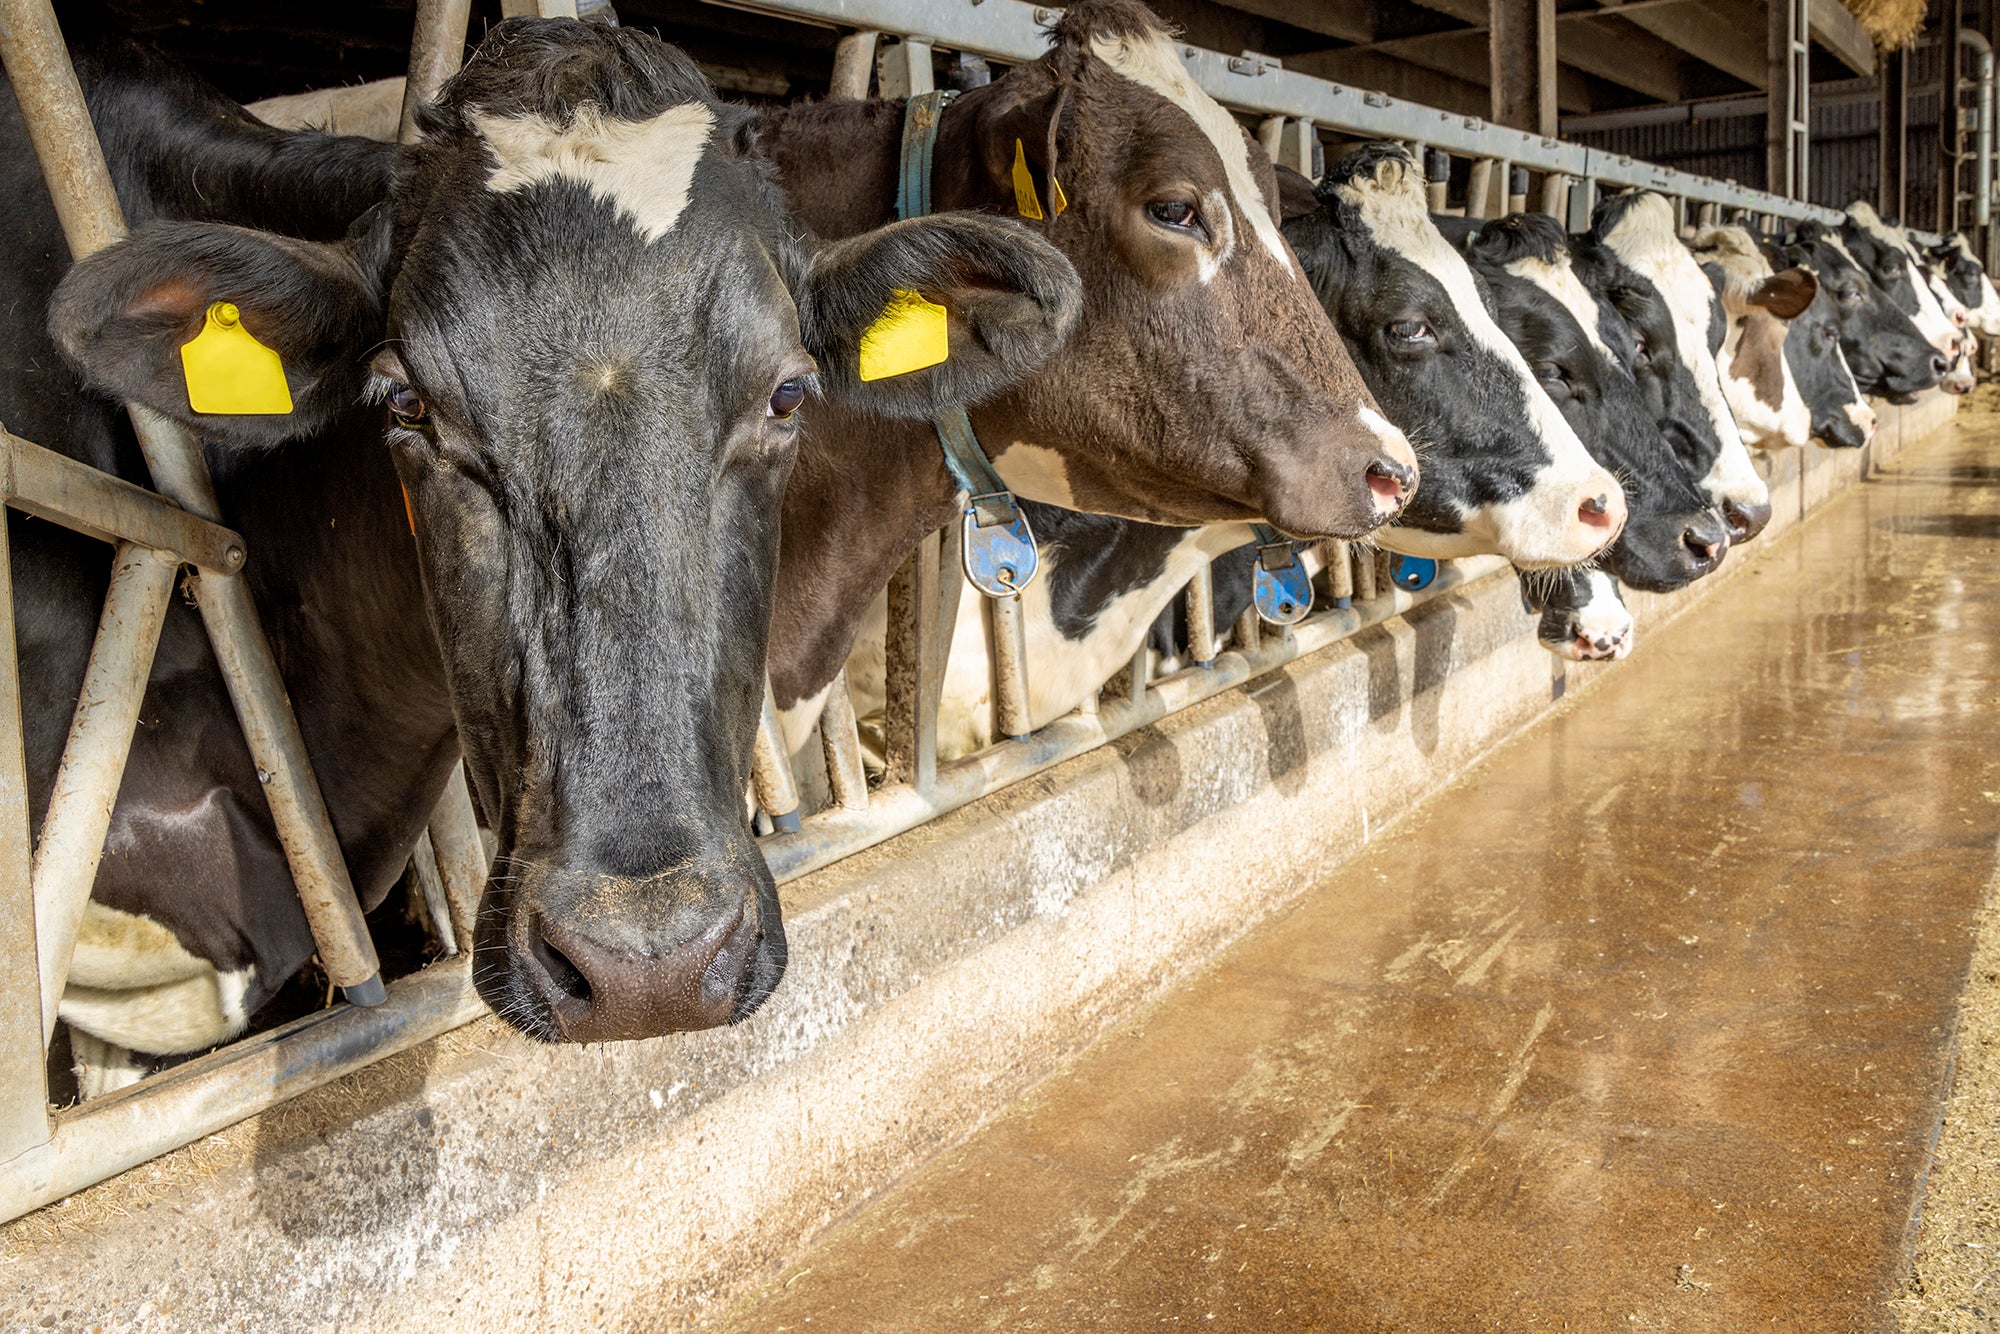 Cow in a barn in a row waiting for feeding time, peeking through bars